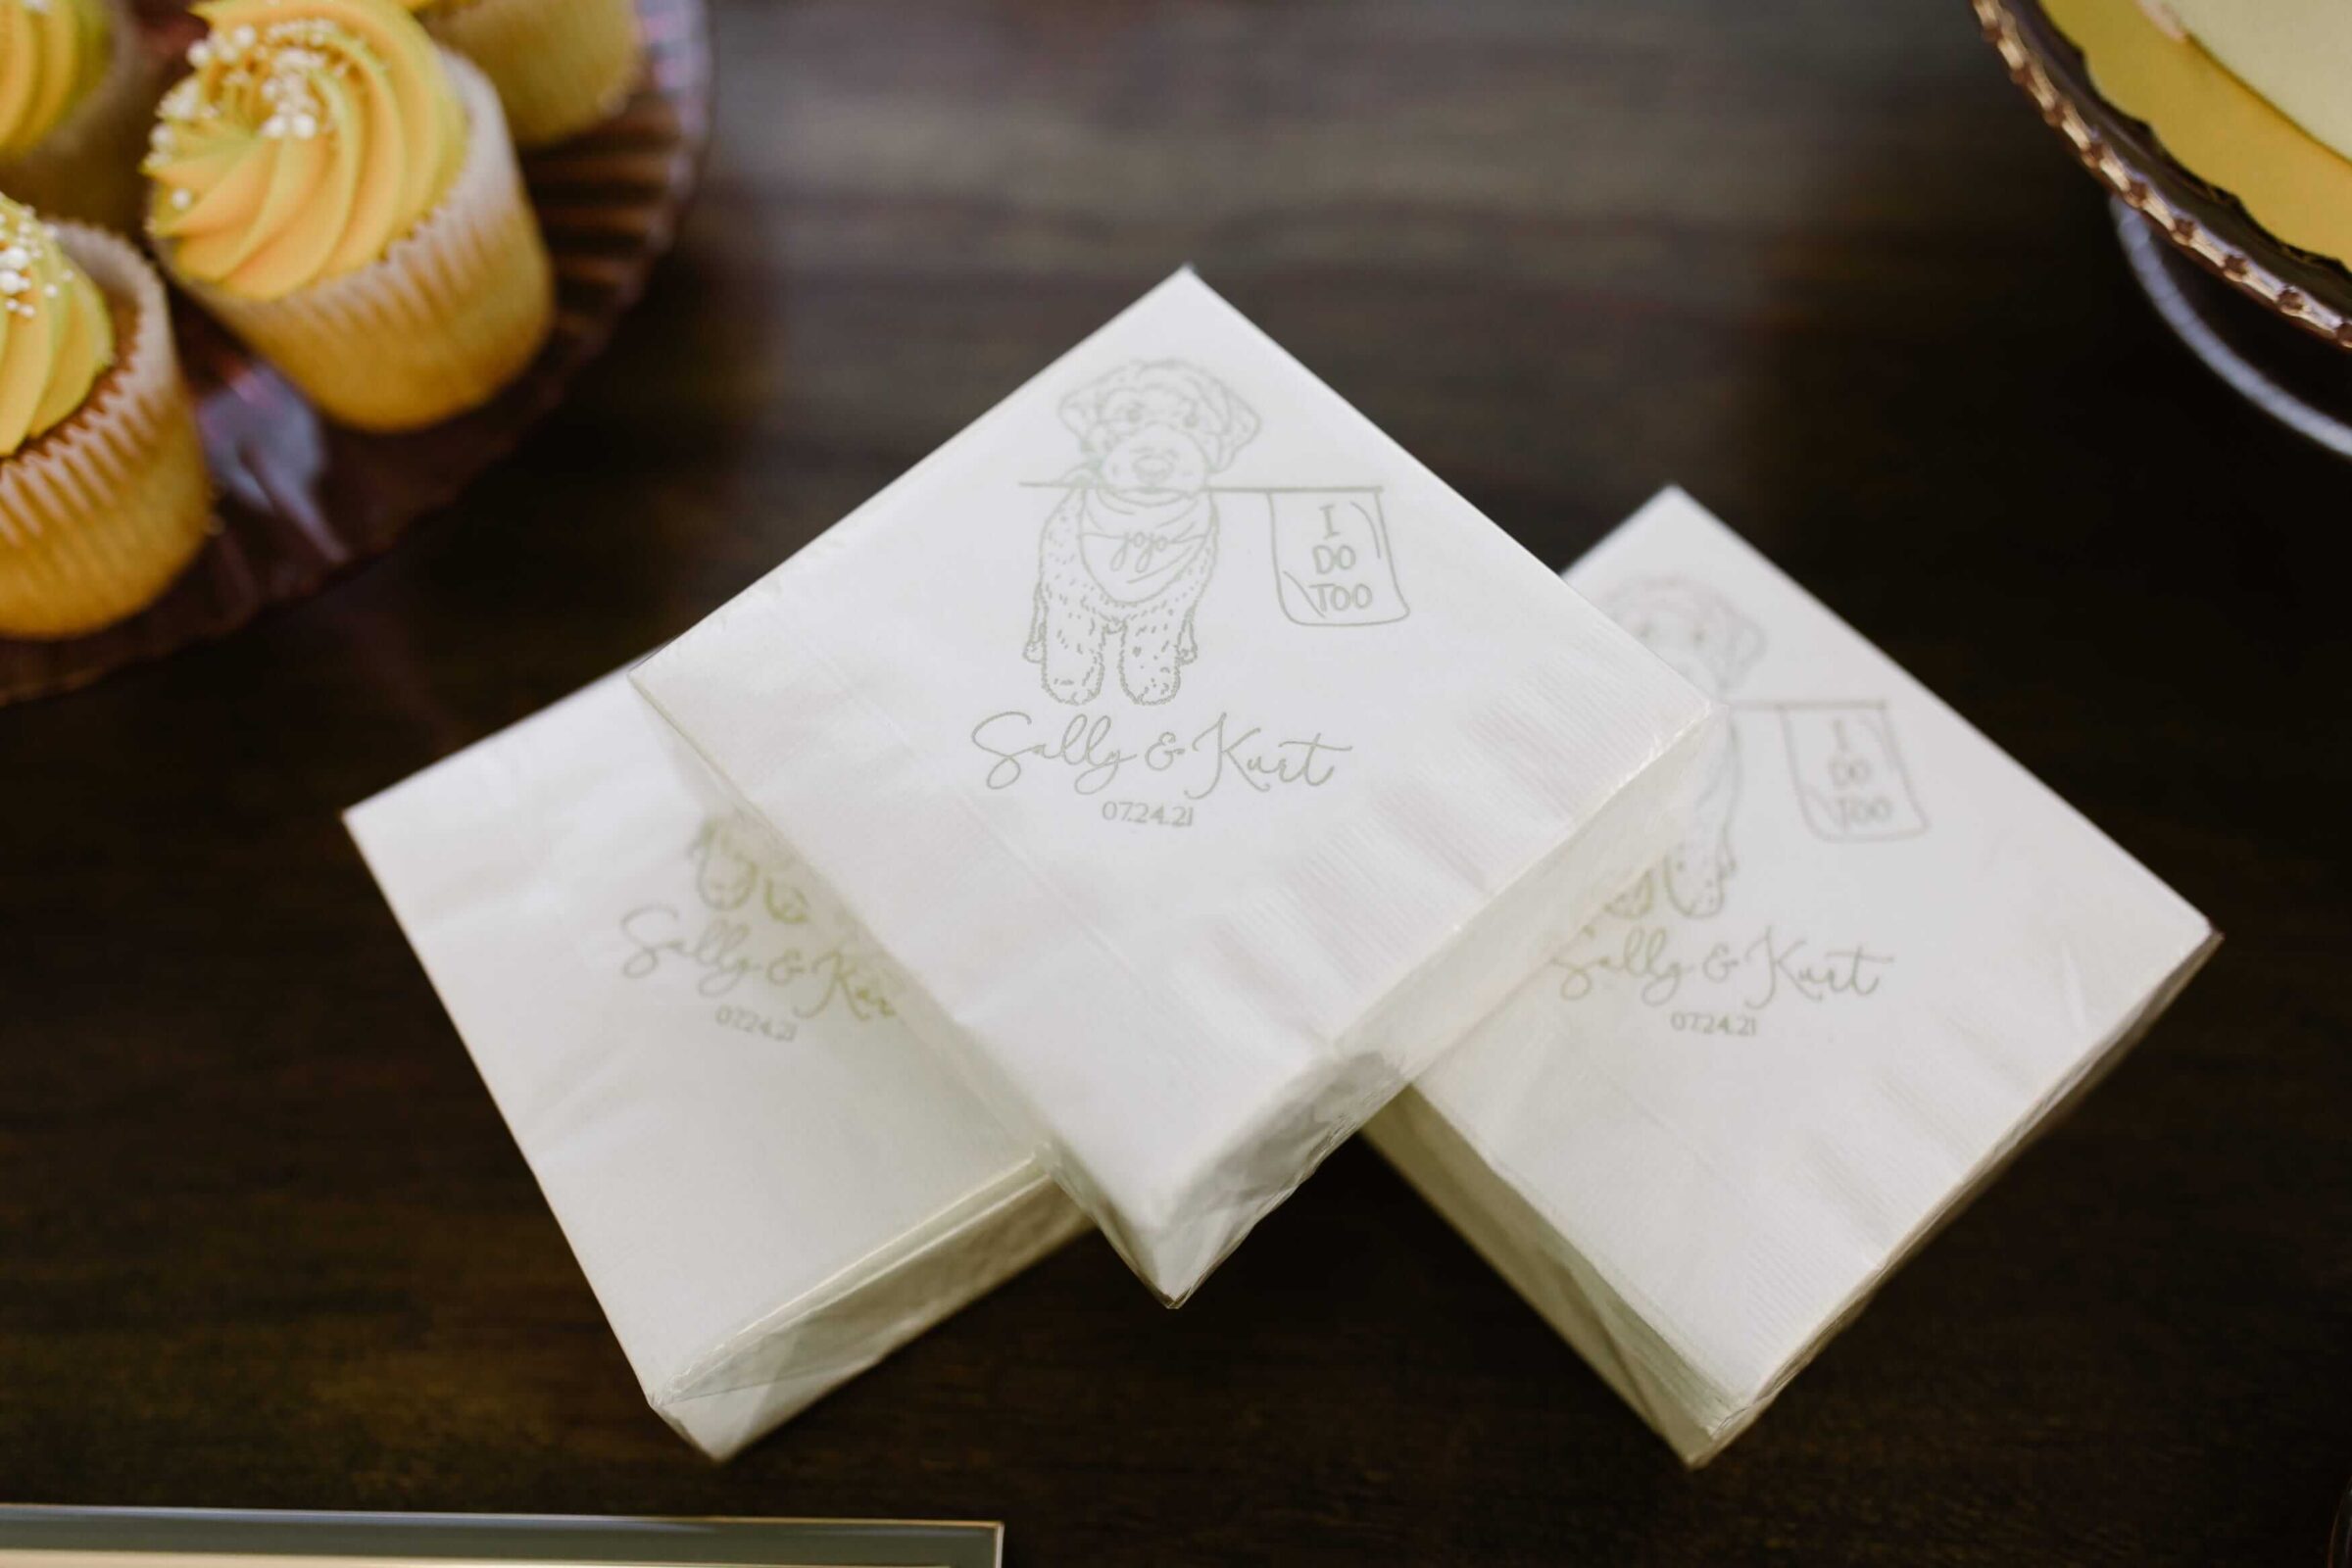 Custom wedding napkins with dog illustration and names.